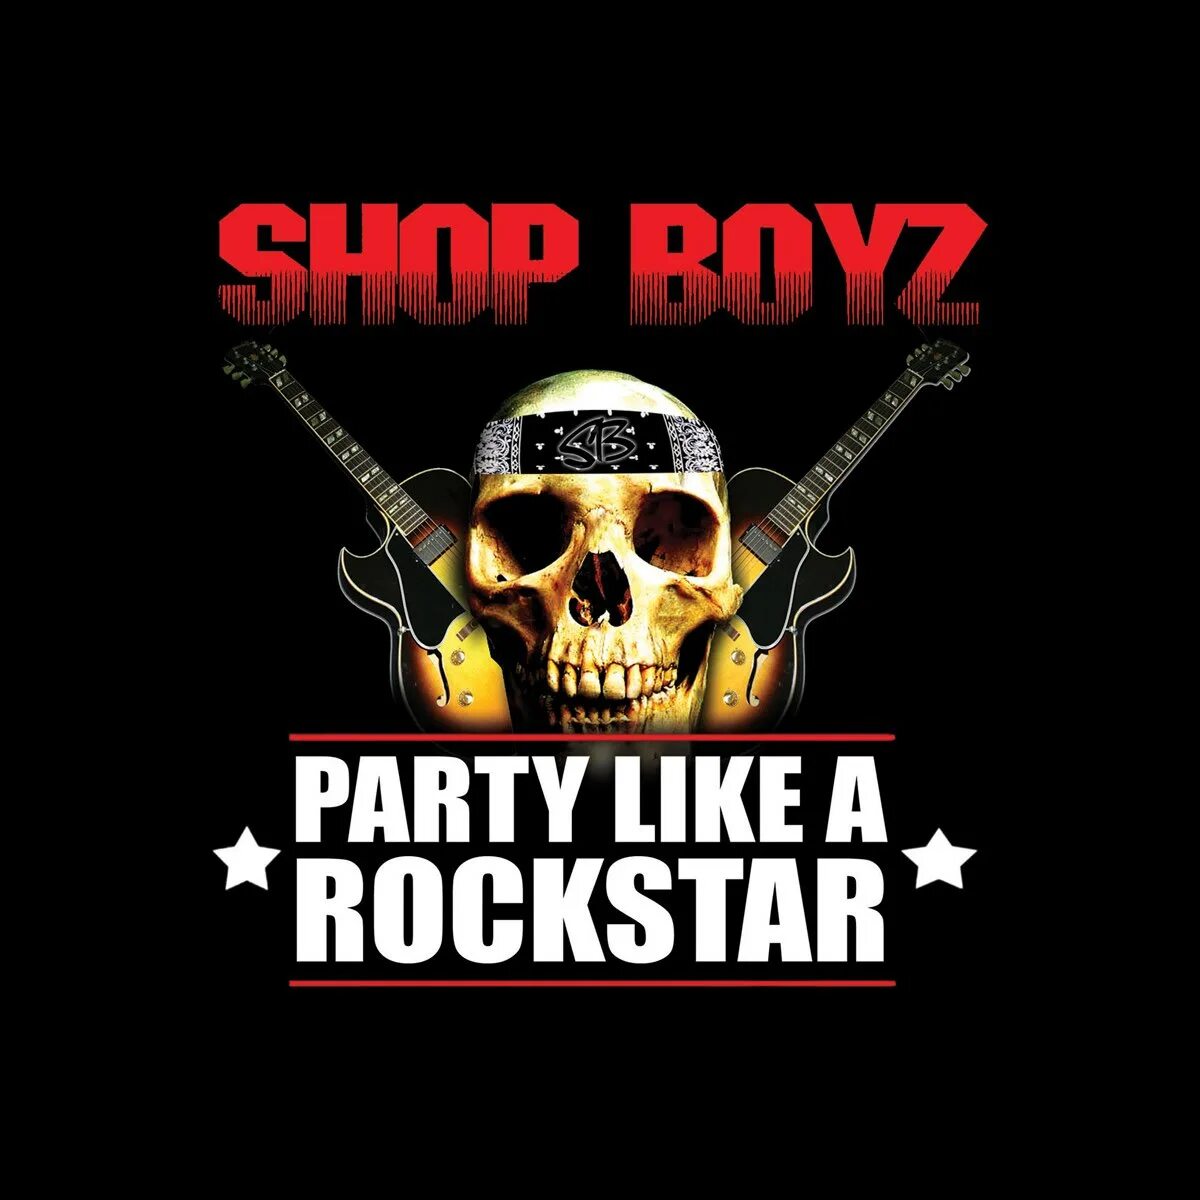 Песня party like a rockstar look like. Shop Boyz Party like a Rockstar. Party like a Rockstar. Shop boys - Rockstar Mentality. Вайт панк рокстар обложка.